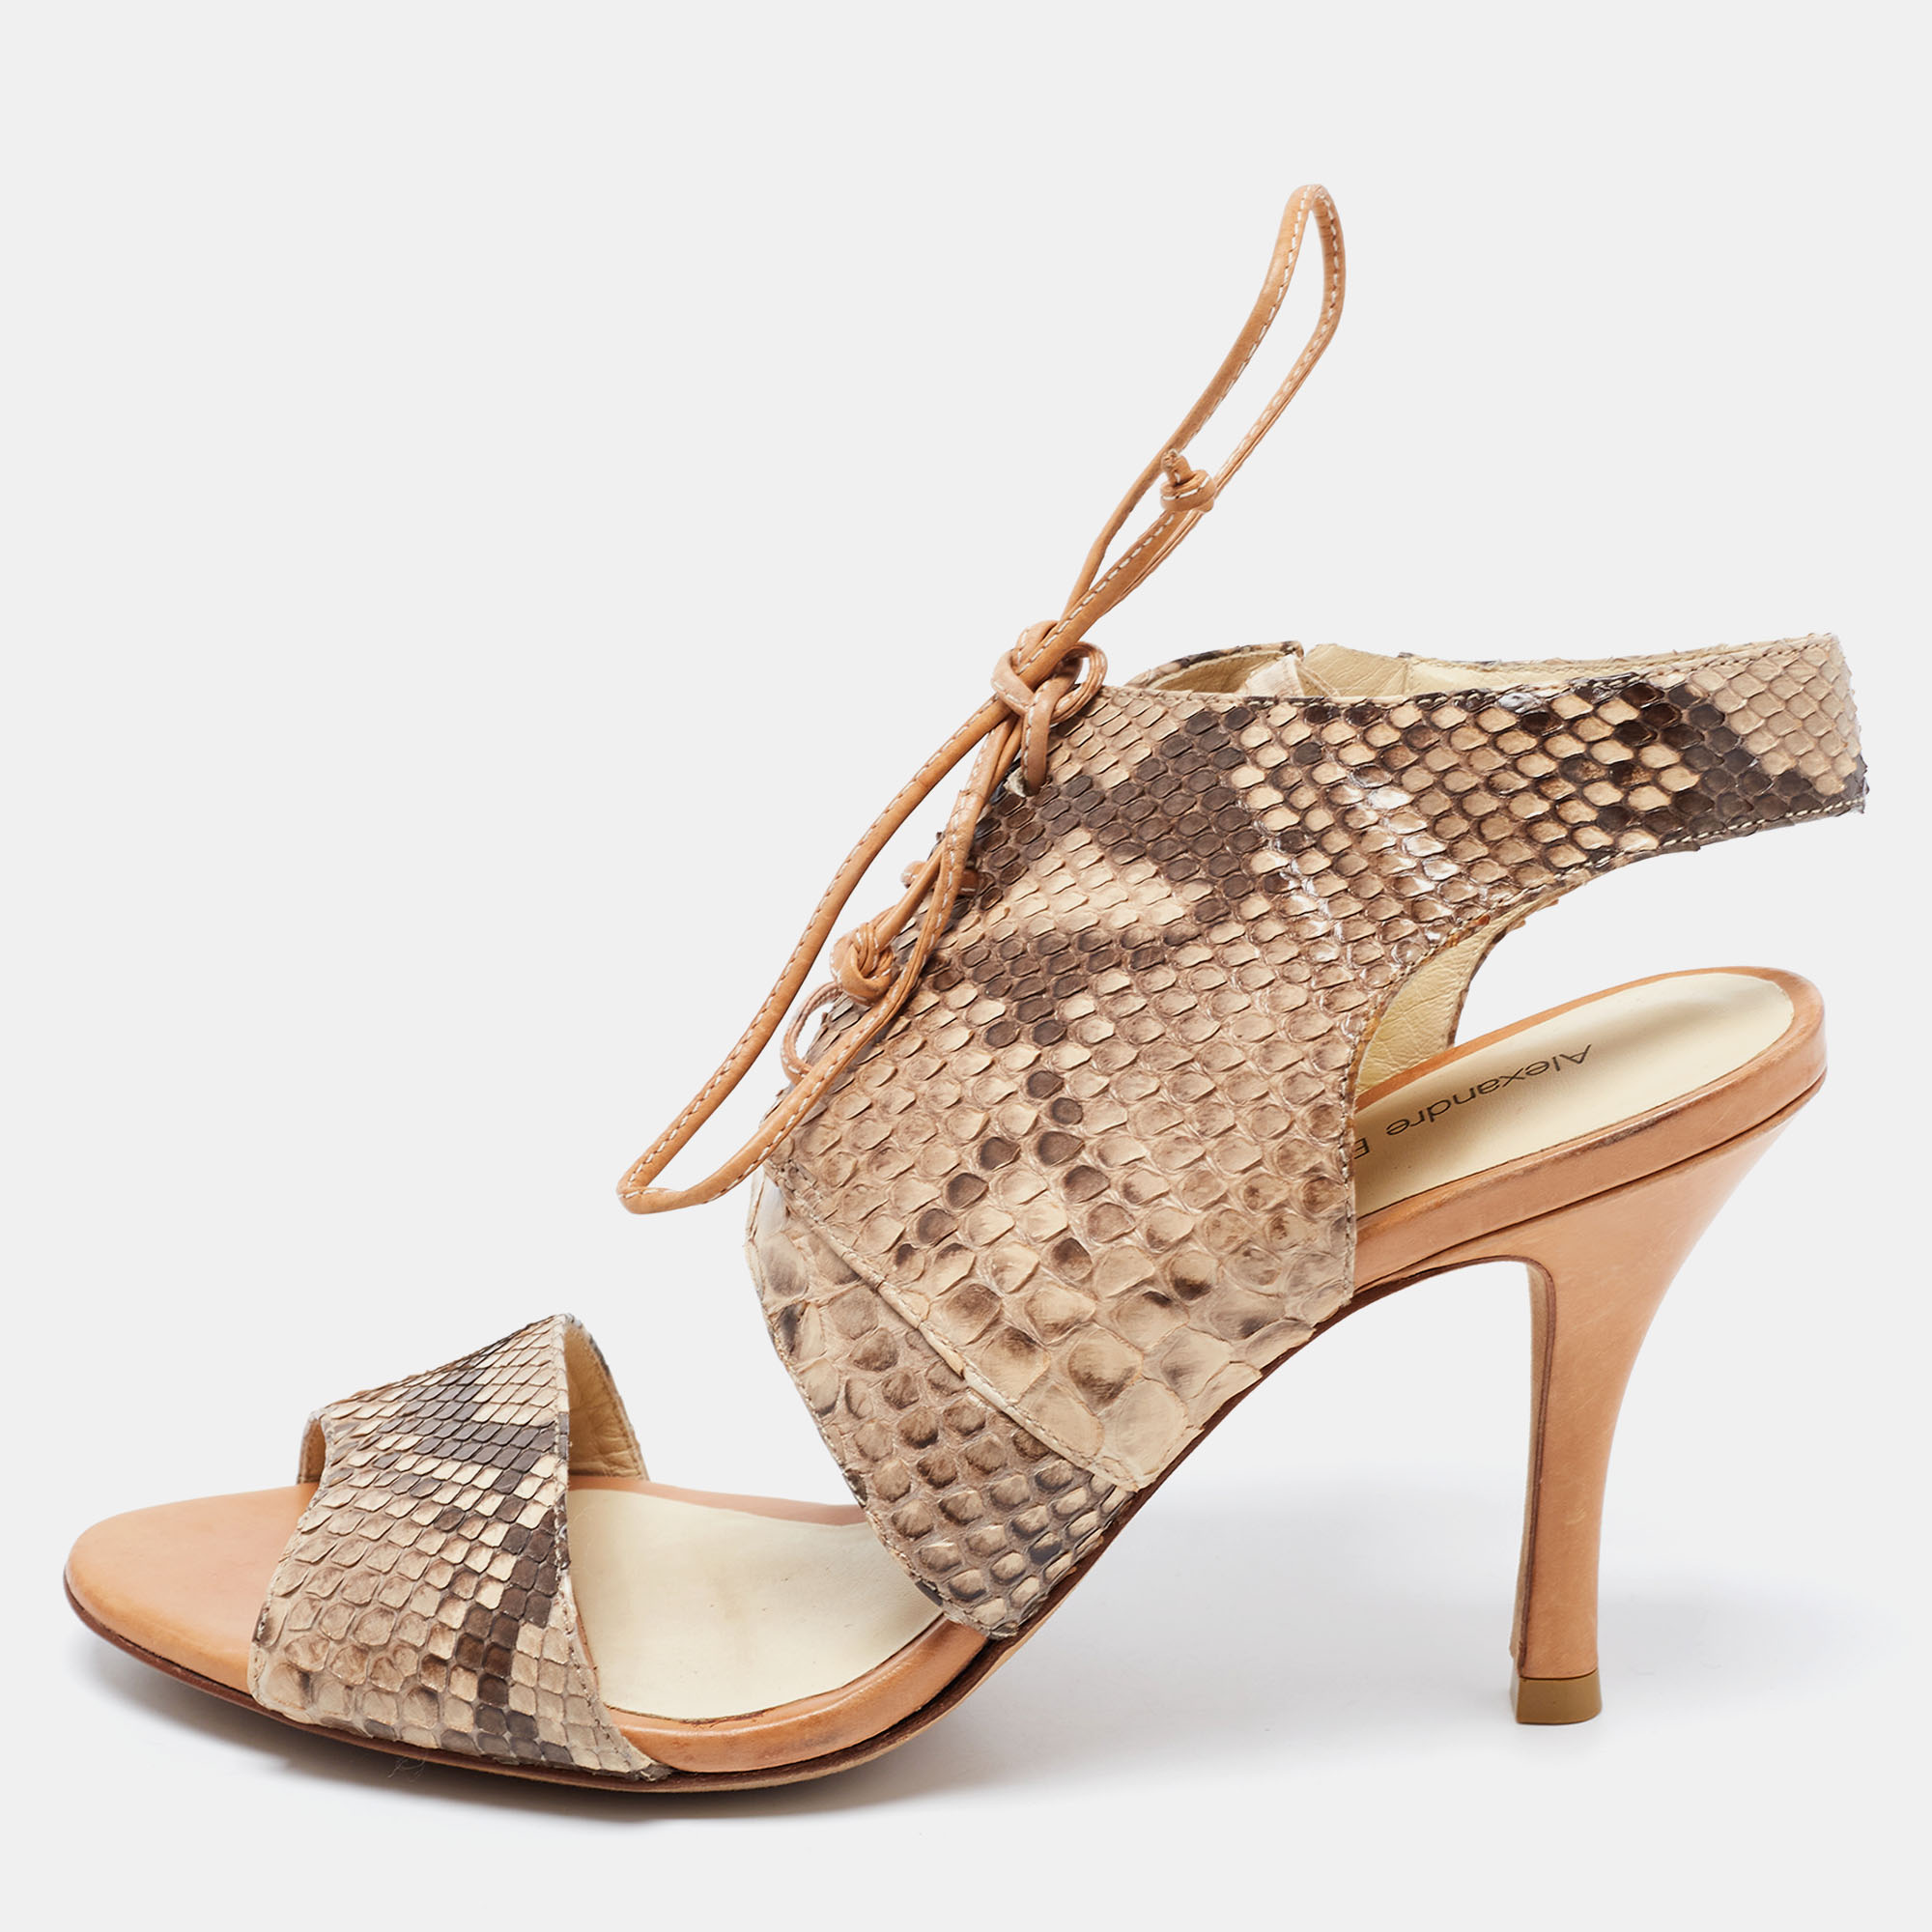 Alexandre Birman Beige/Brown Snakeskin Lace Up Sandals Size 39.5